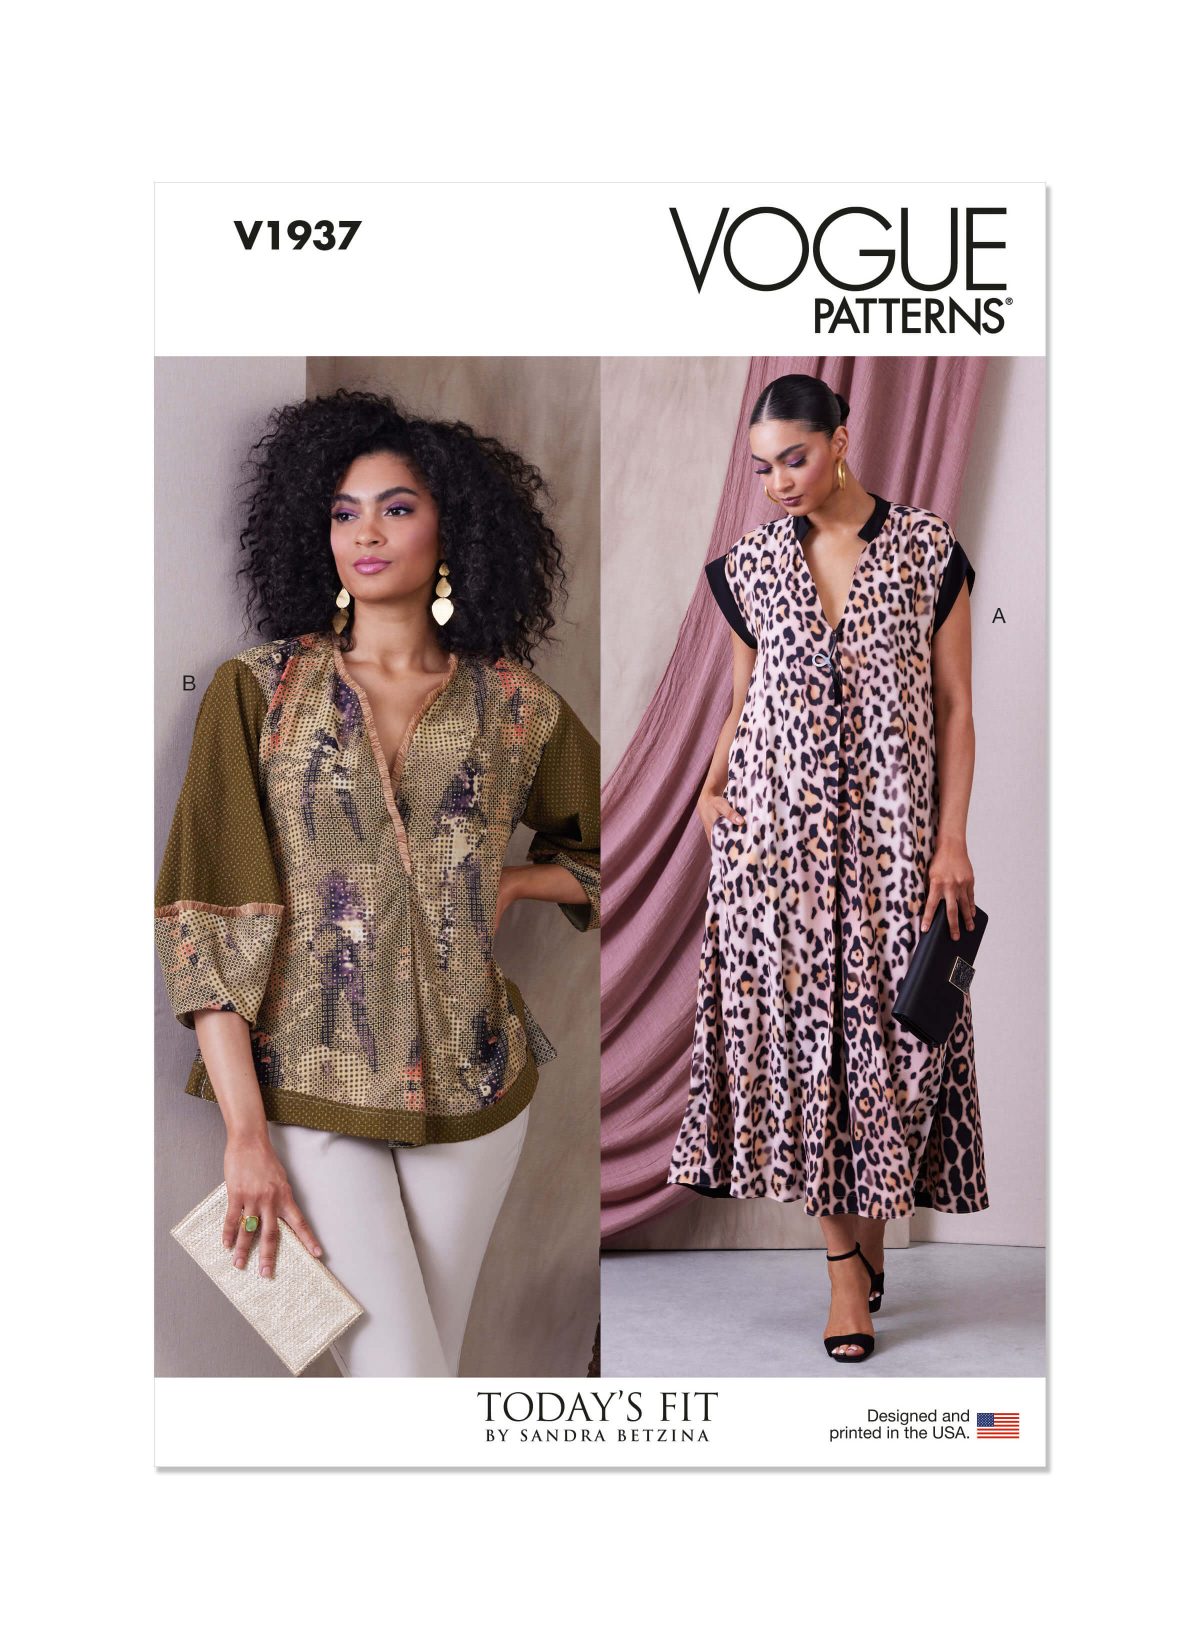 Vogue Patterns V1937 Misses' Dress and Tunic by Sandra Betzina